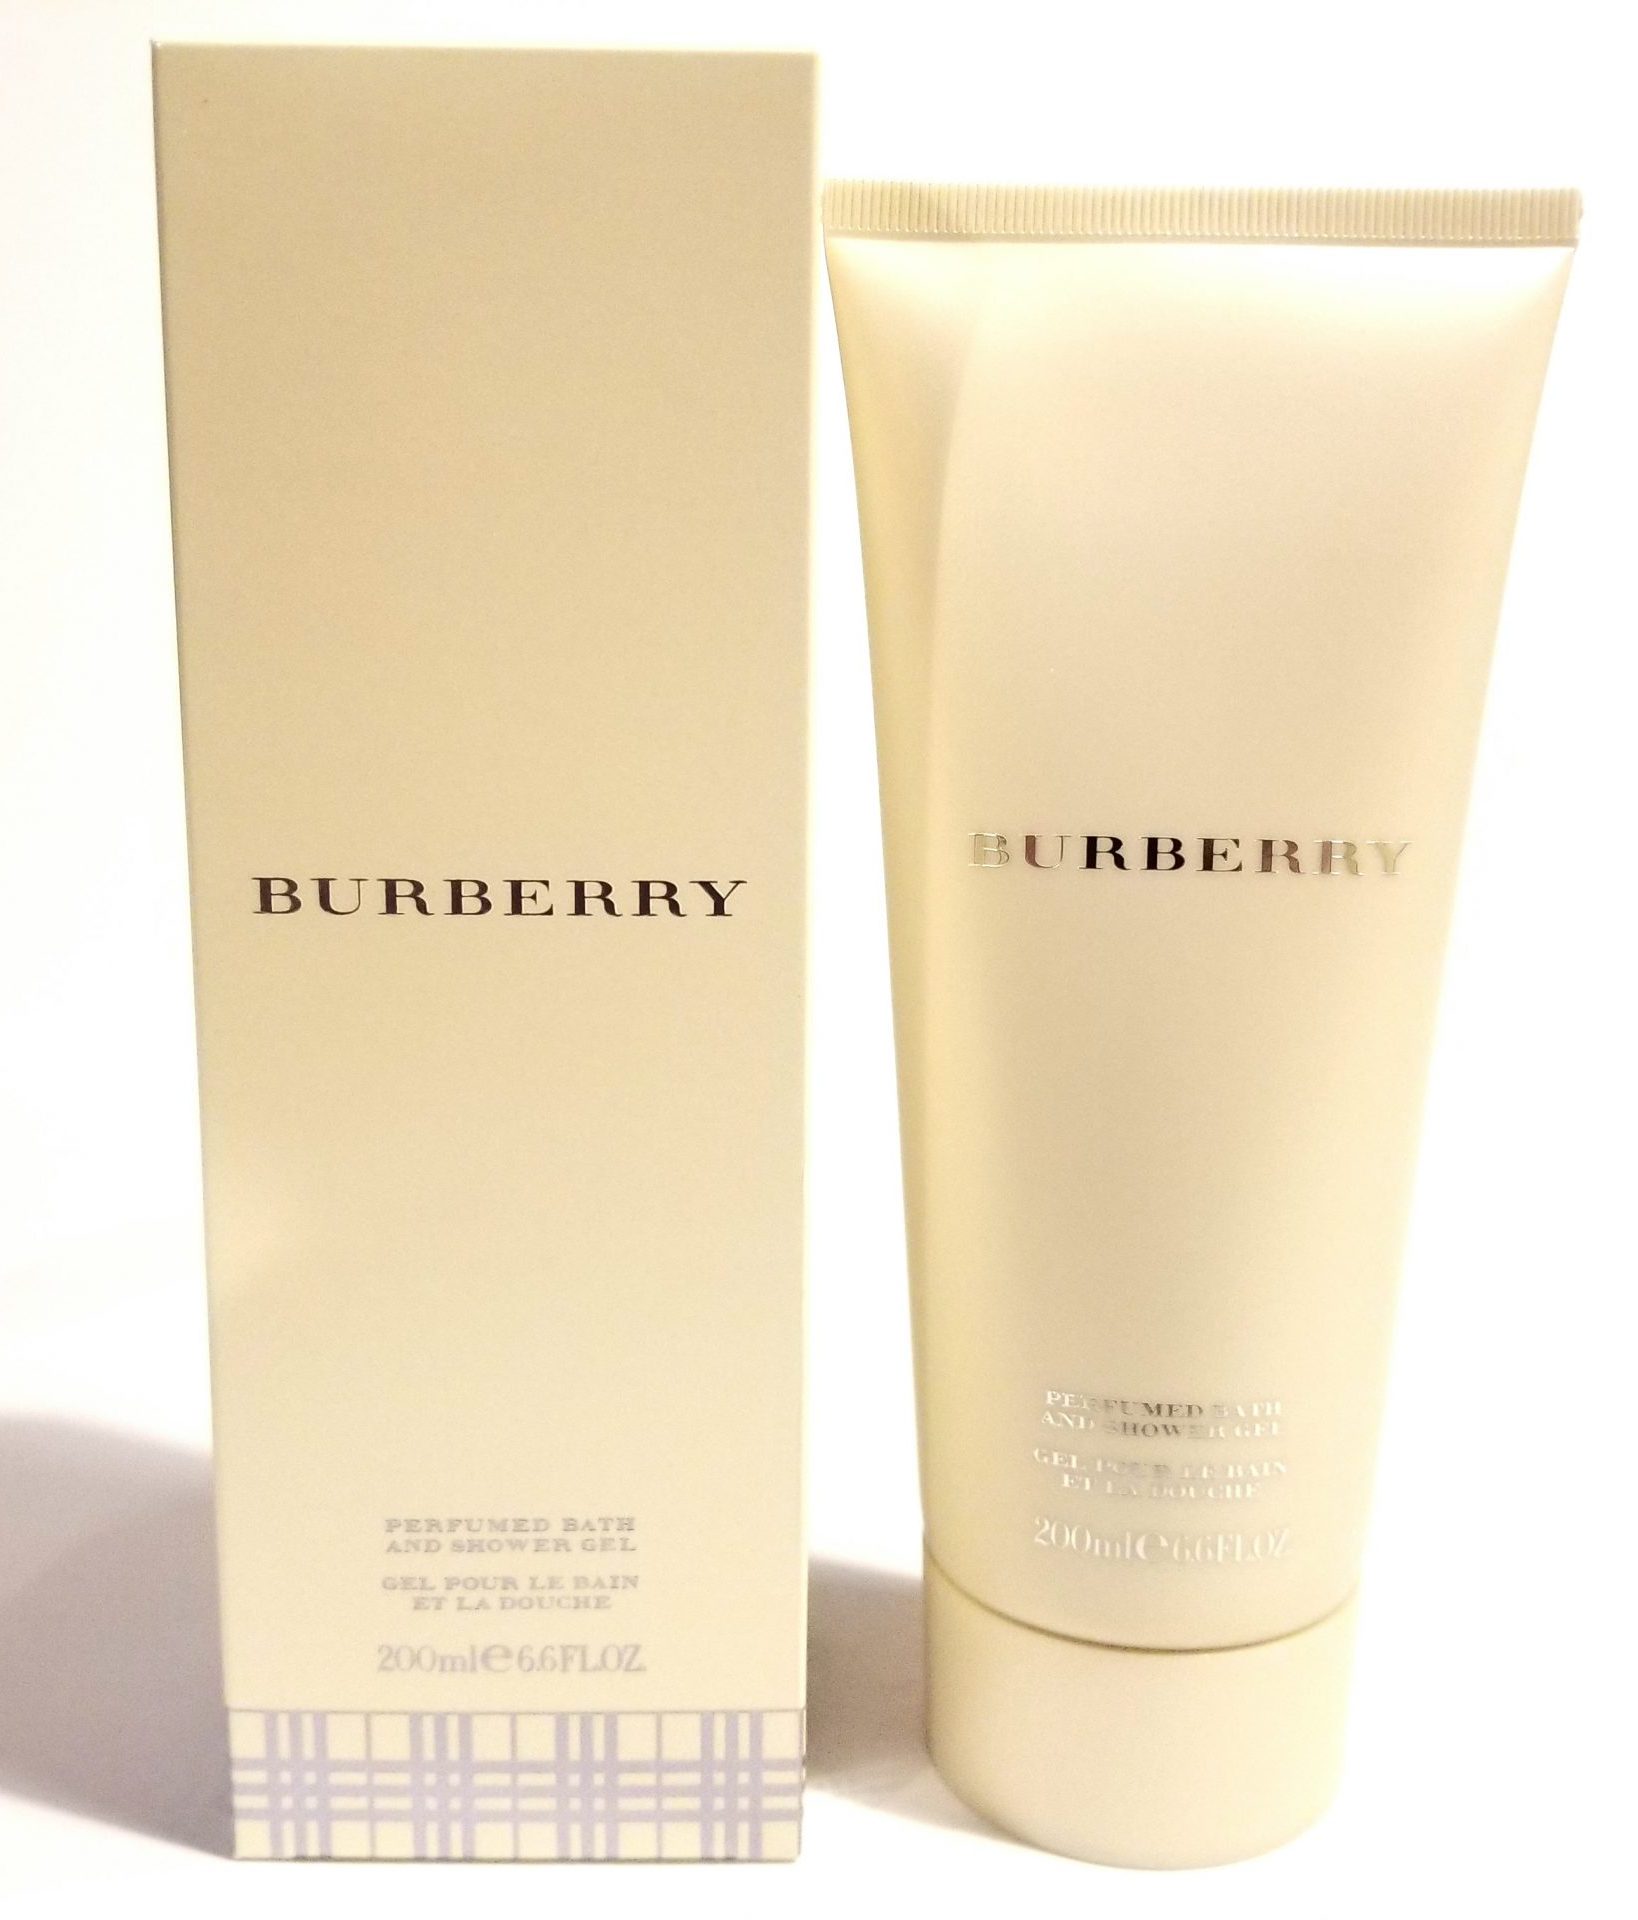 Burberry Perfumed Bath & Shower Gel for Her